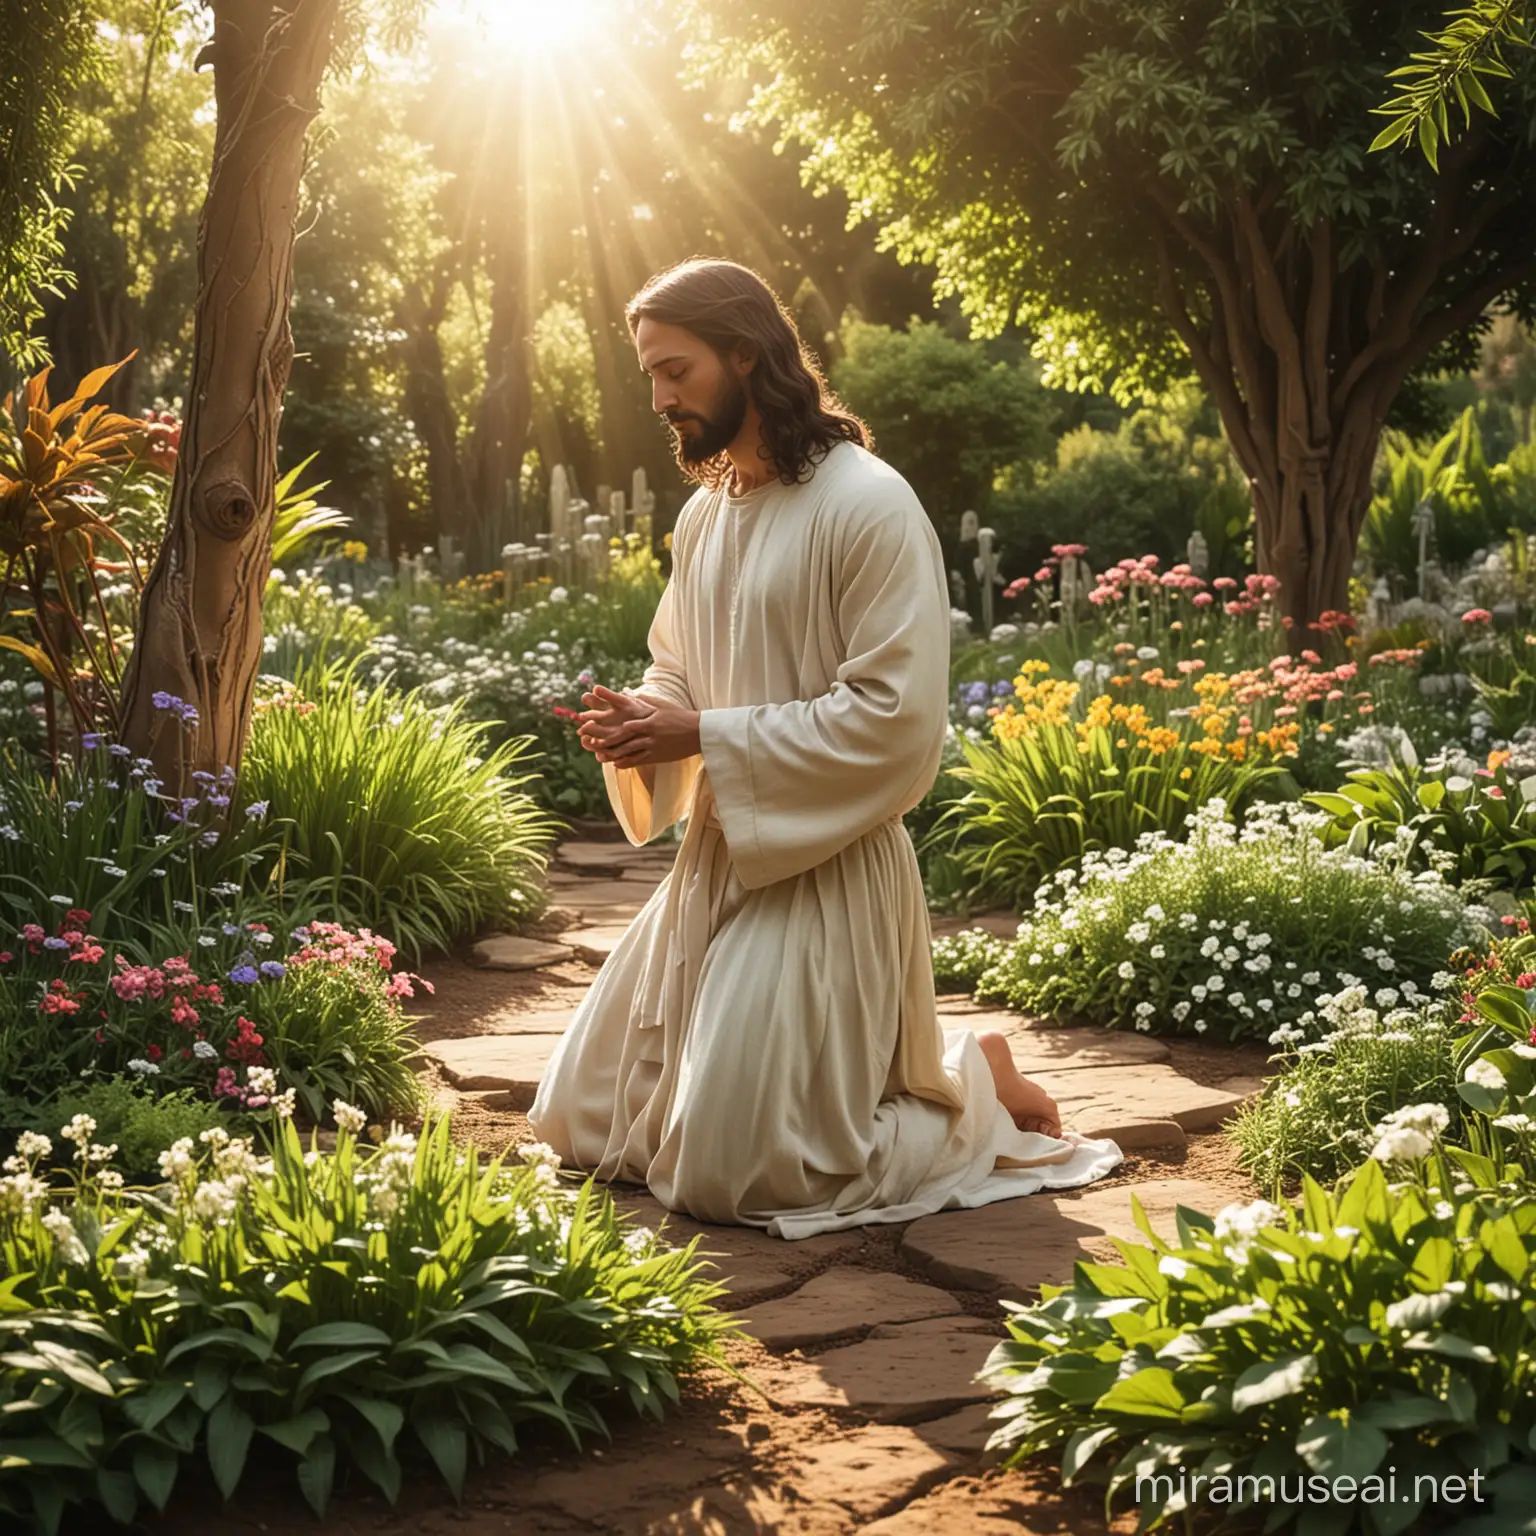 Jesus Christ Praying in Serene Garden Setting